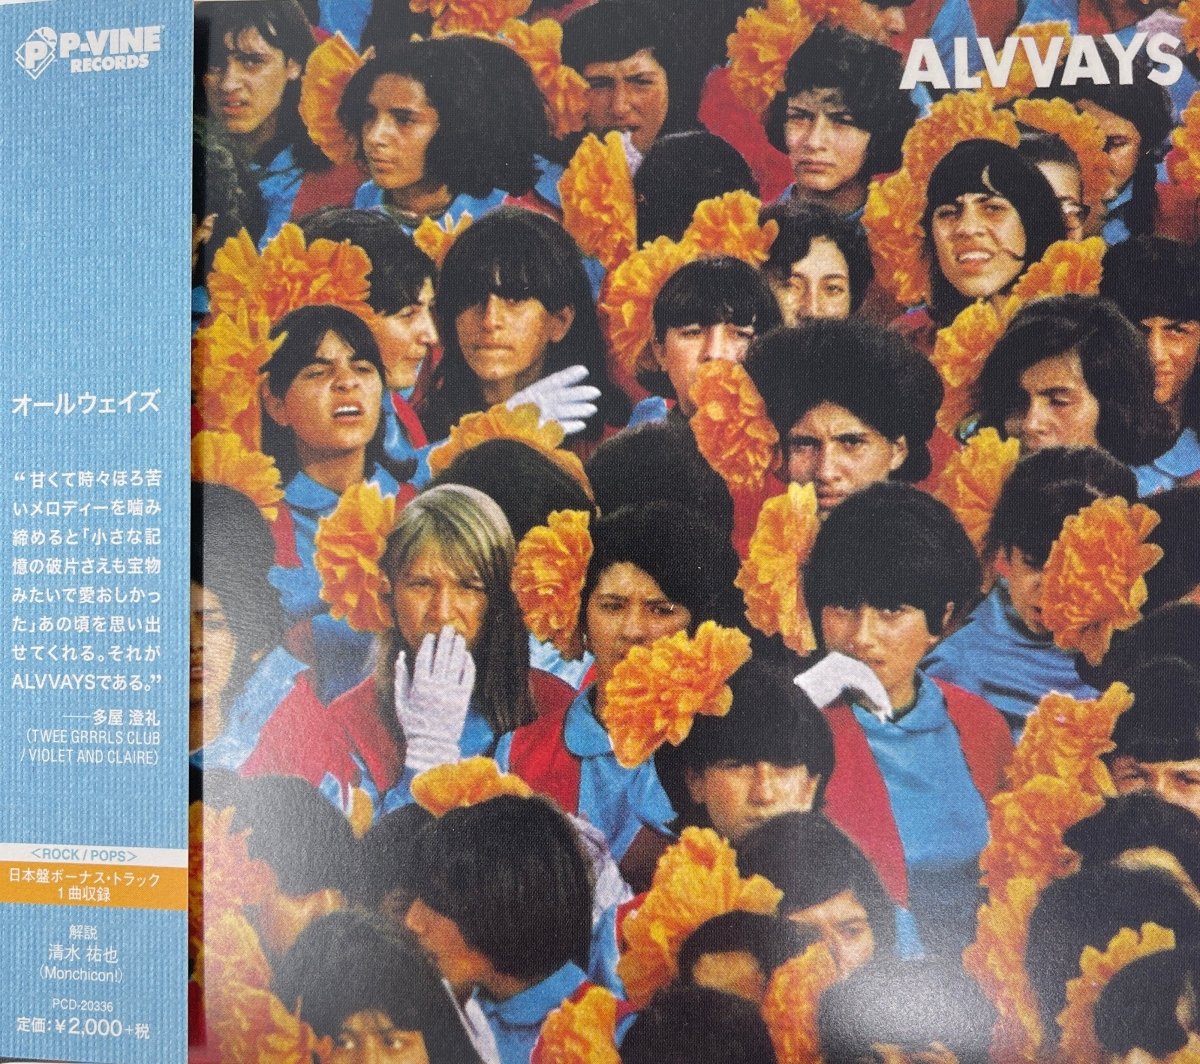 Alvvays - Alvvays [Japanese Import CD]